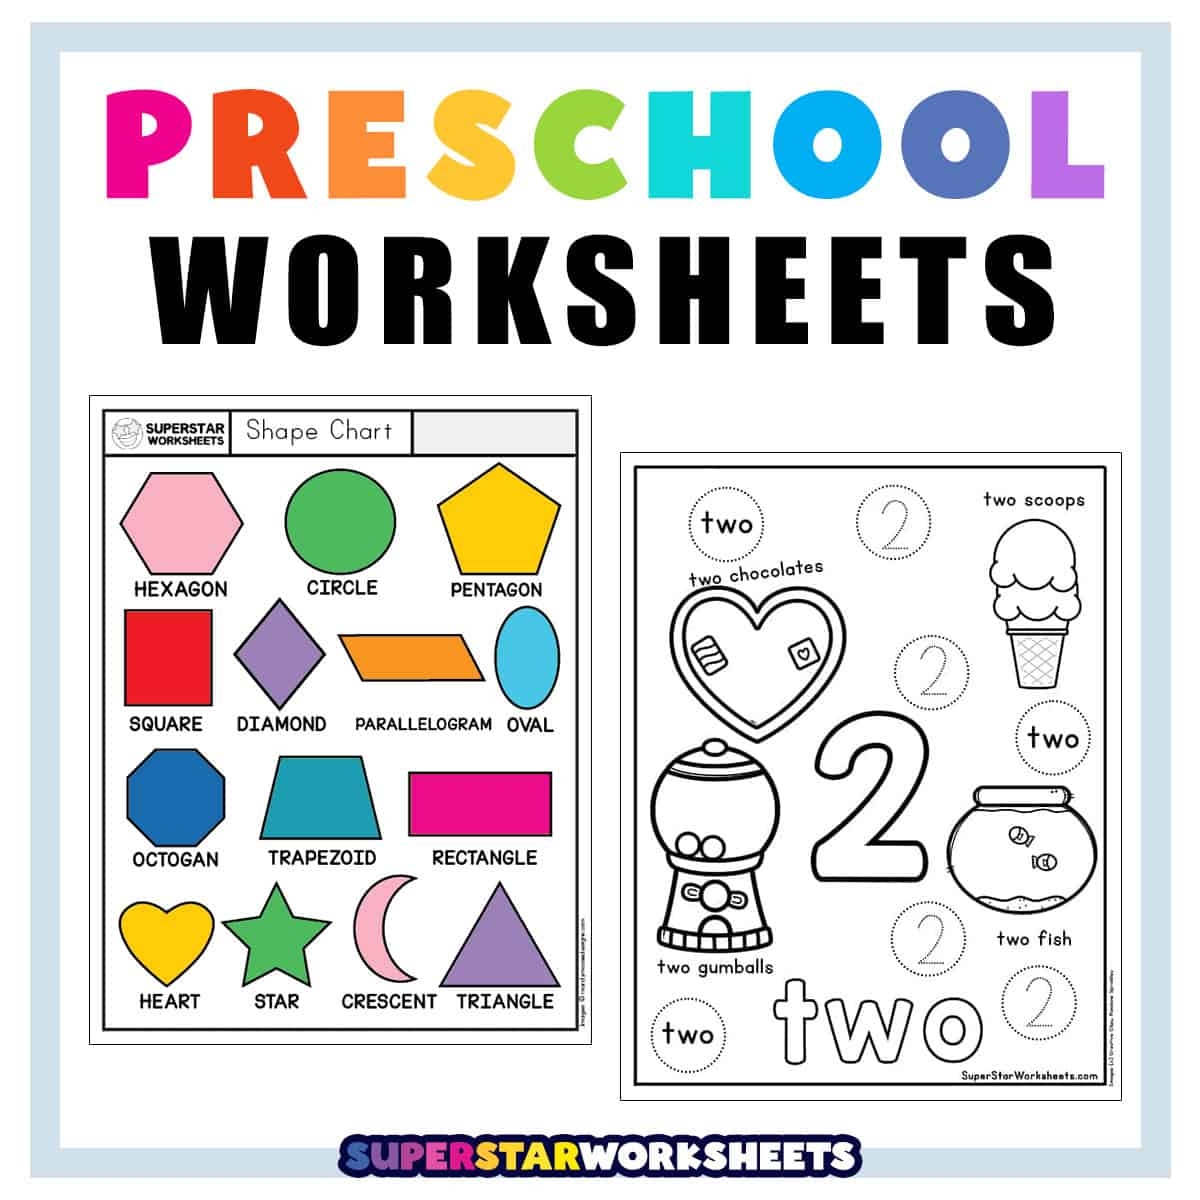 Preschool Worksheets Superstar Worksheets - Free Printable Activities For Preschoolers